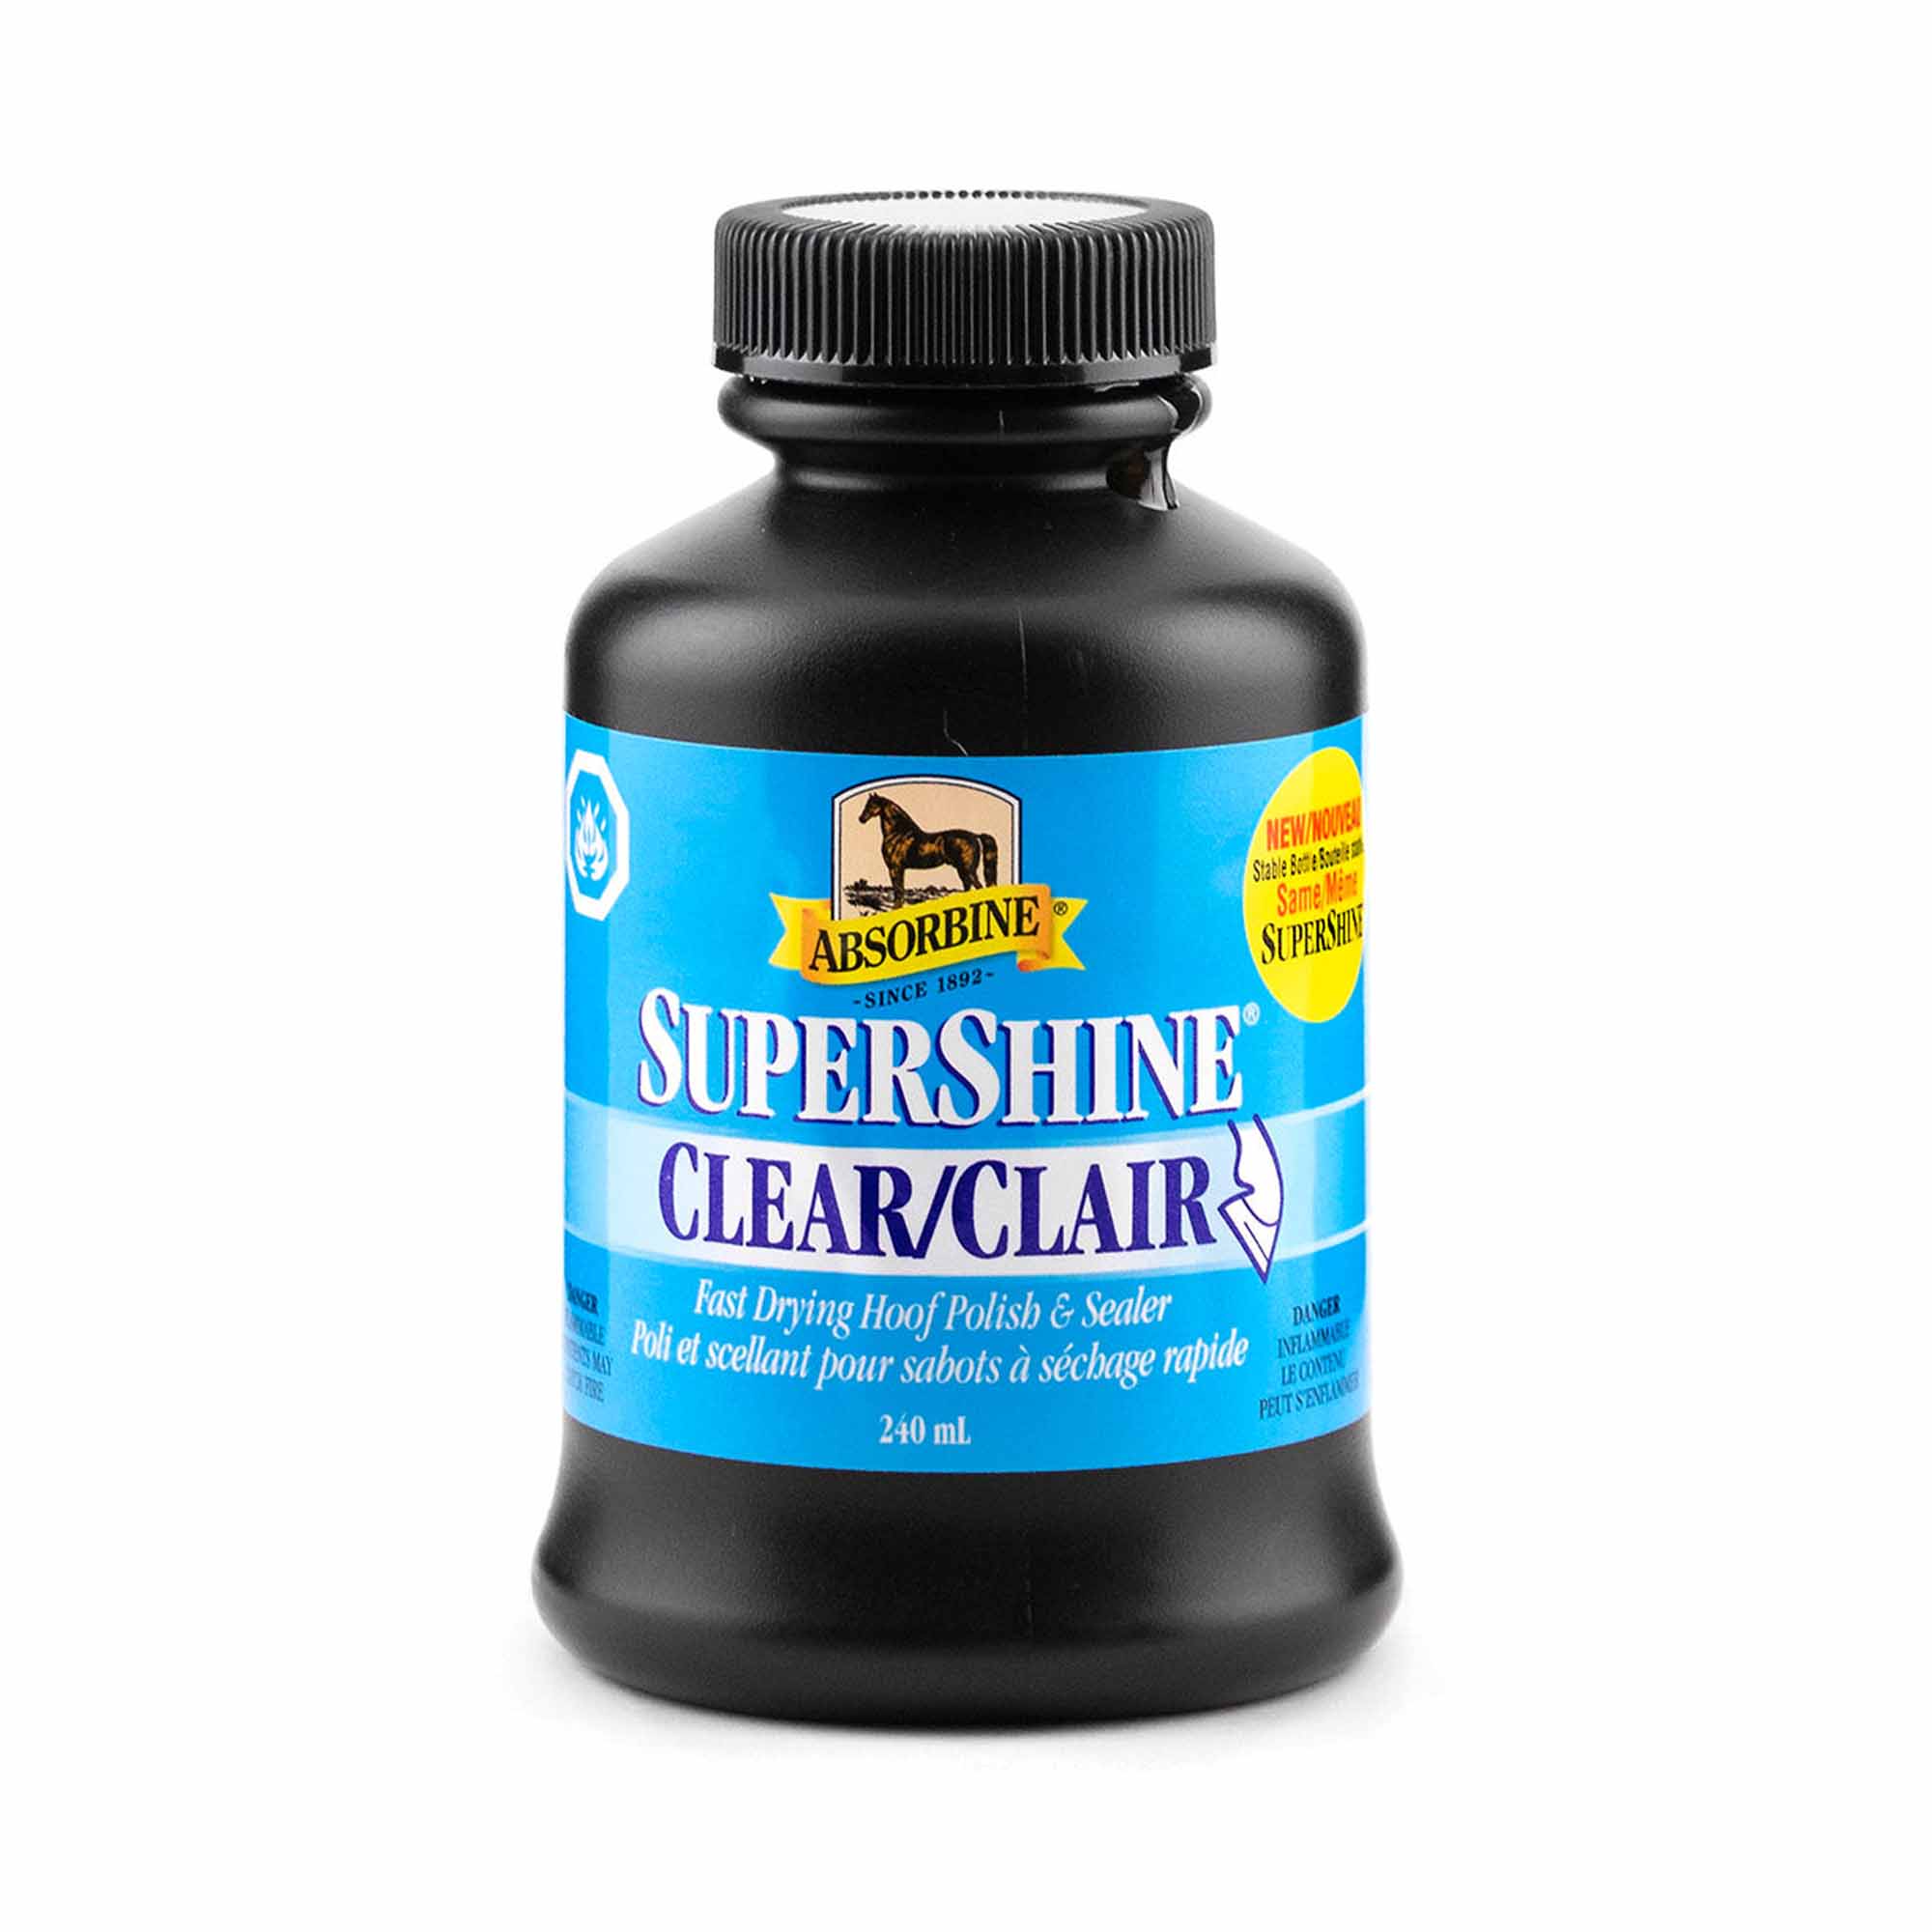 Clear hoof polish and sealant, 240ml - Absorbine Supershine